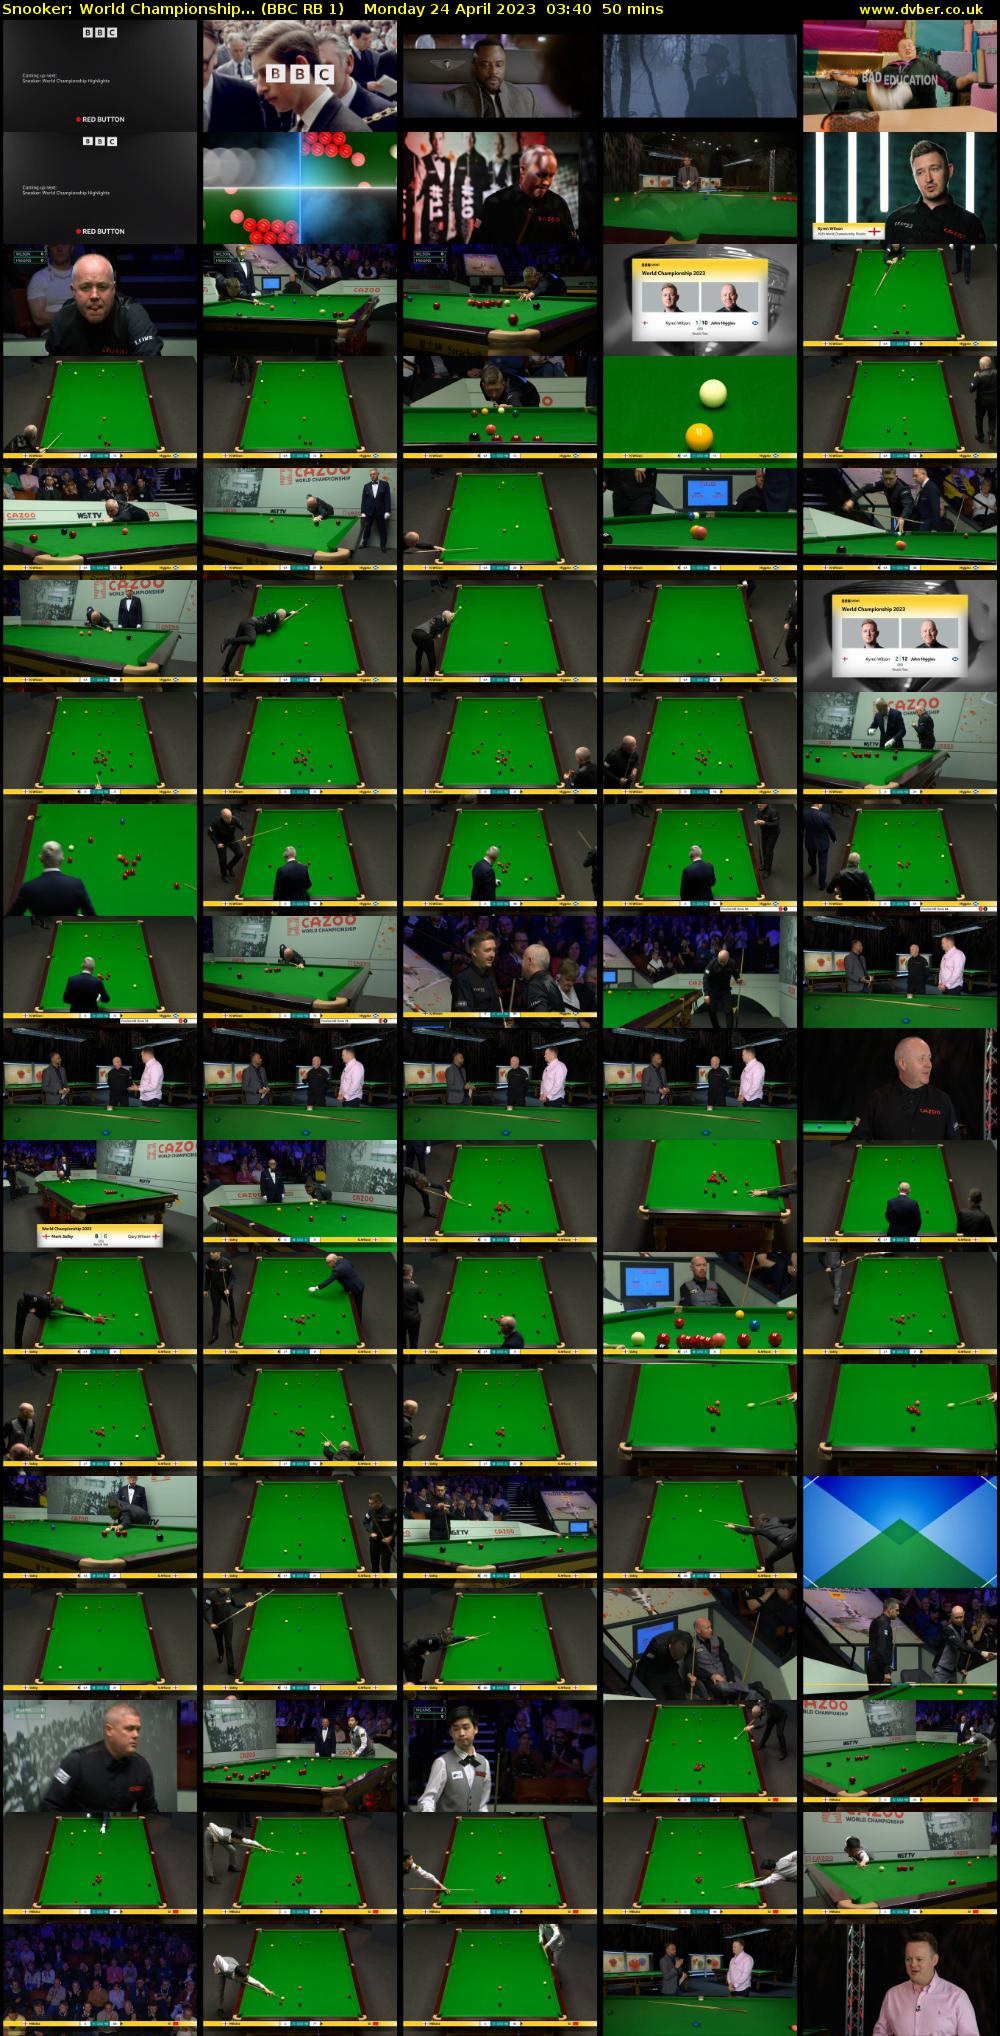 Snooker: World Championship... (BBC RB 1) Monday 24 April 2023 03:40 - 04:30